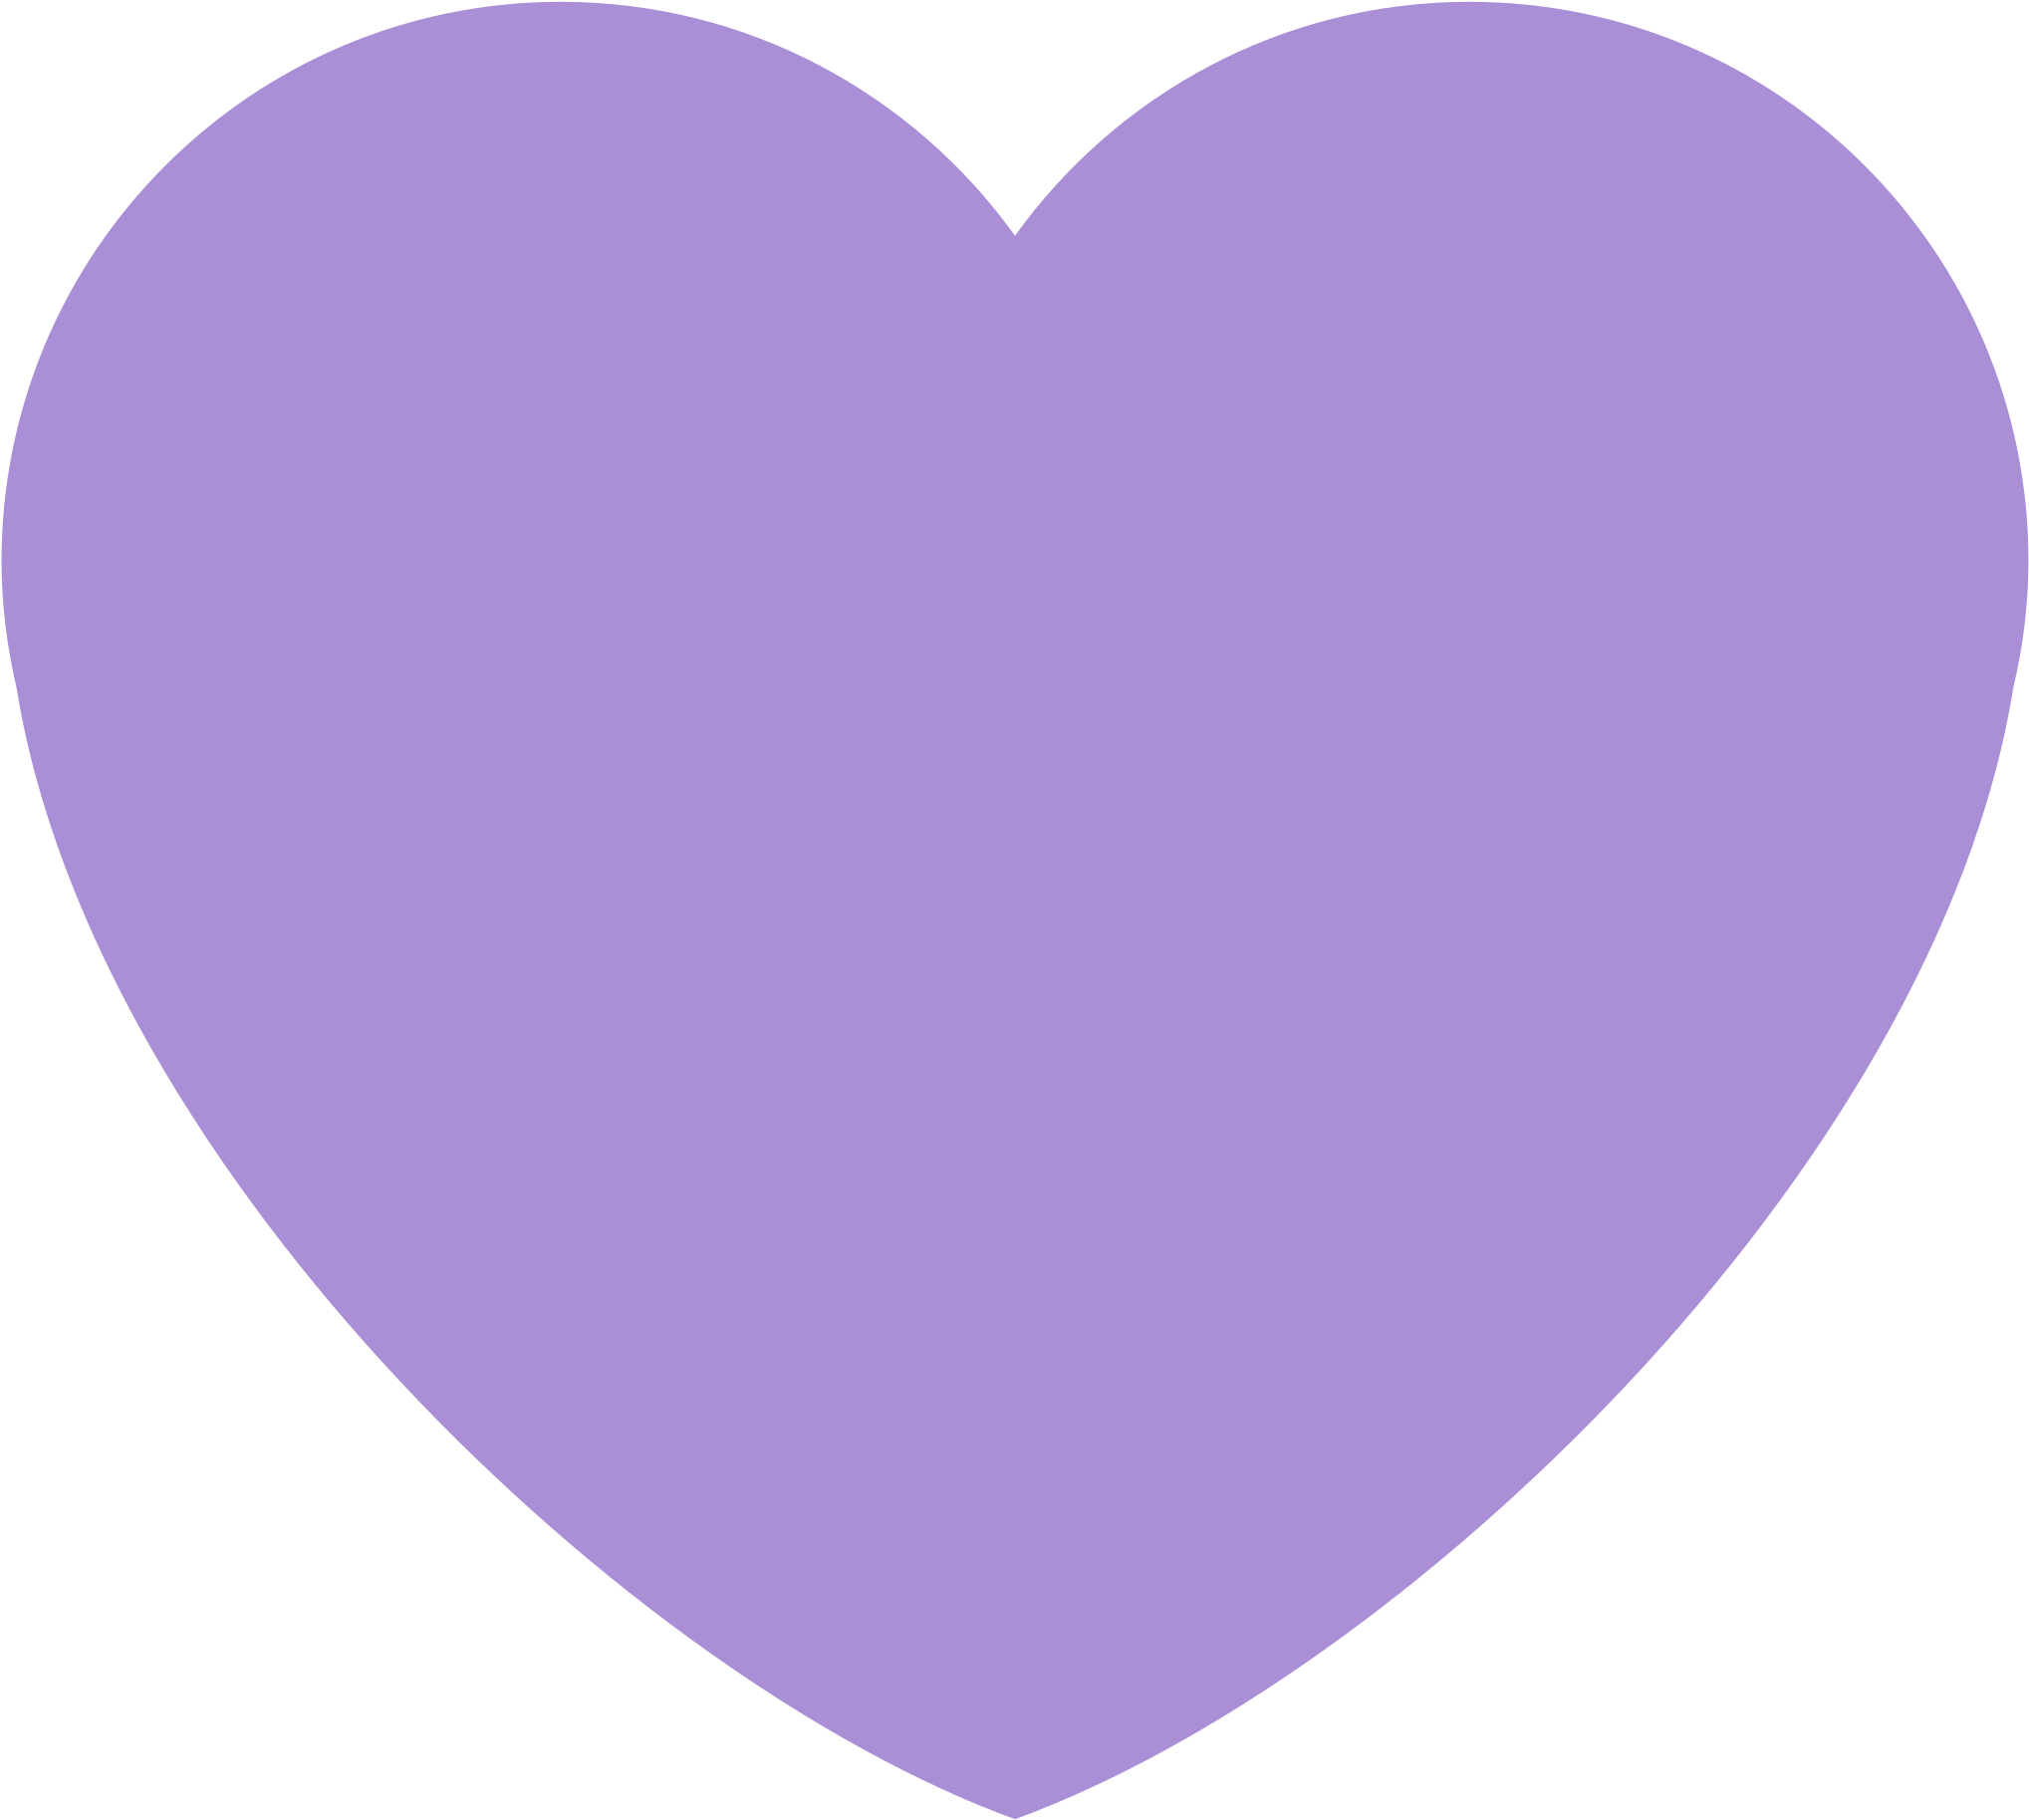 Фиолетовый цвет сердечка. Сиреневое сердце. Сердце фиолетовое. Фиолетовые сердечки. Сиреневое сердечко.